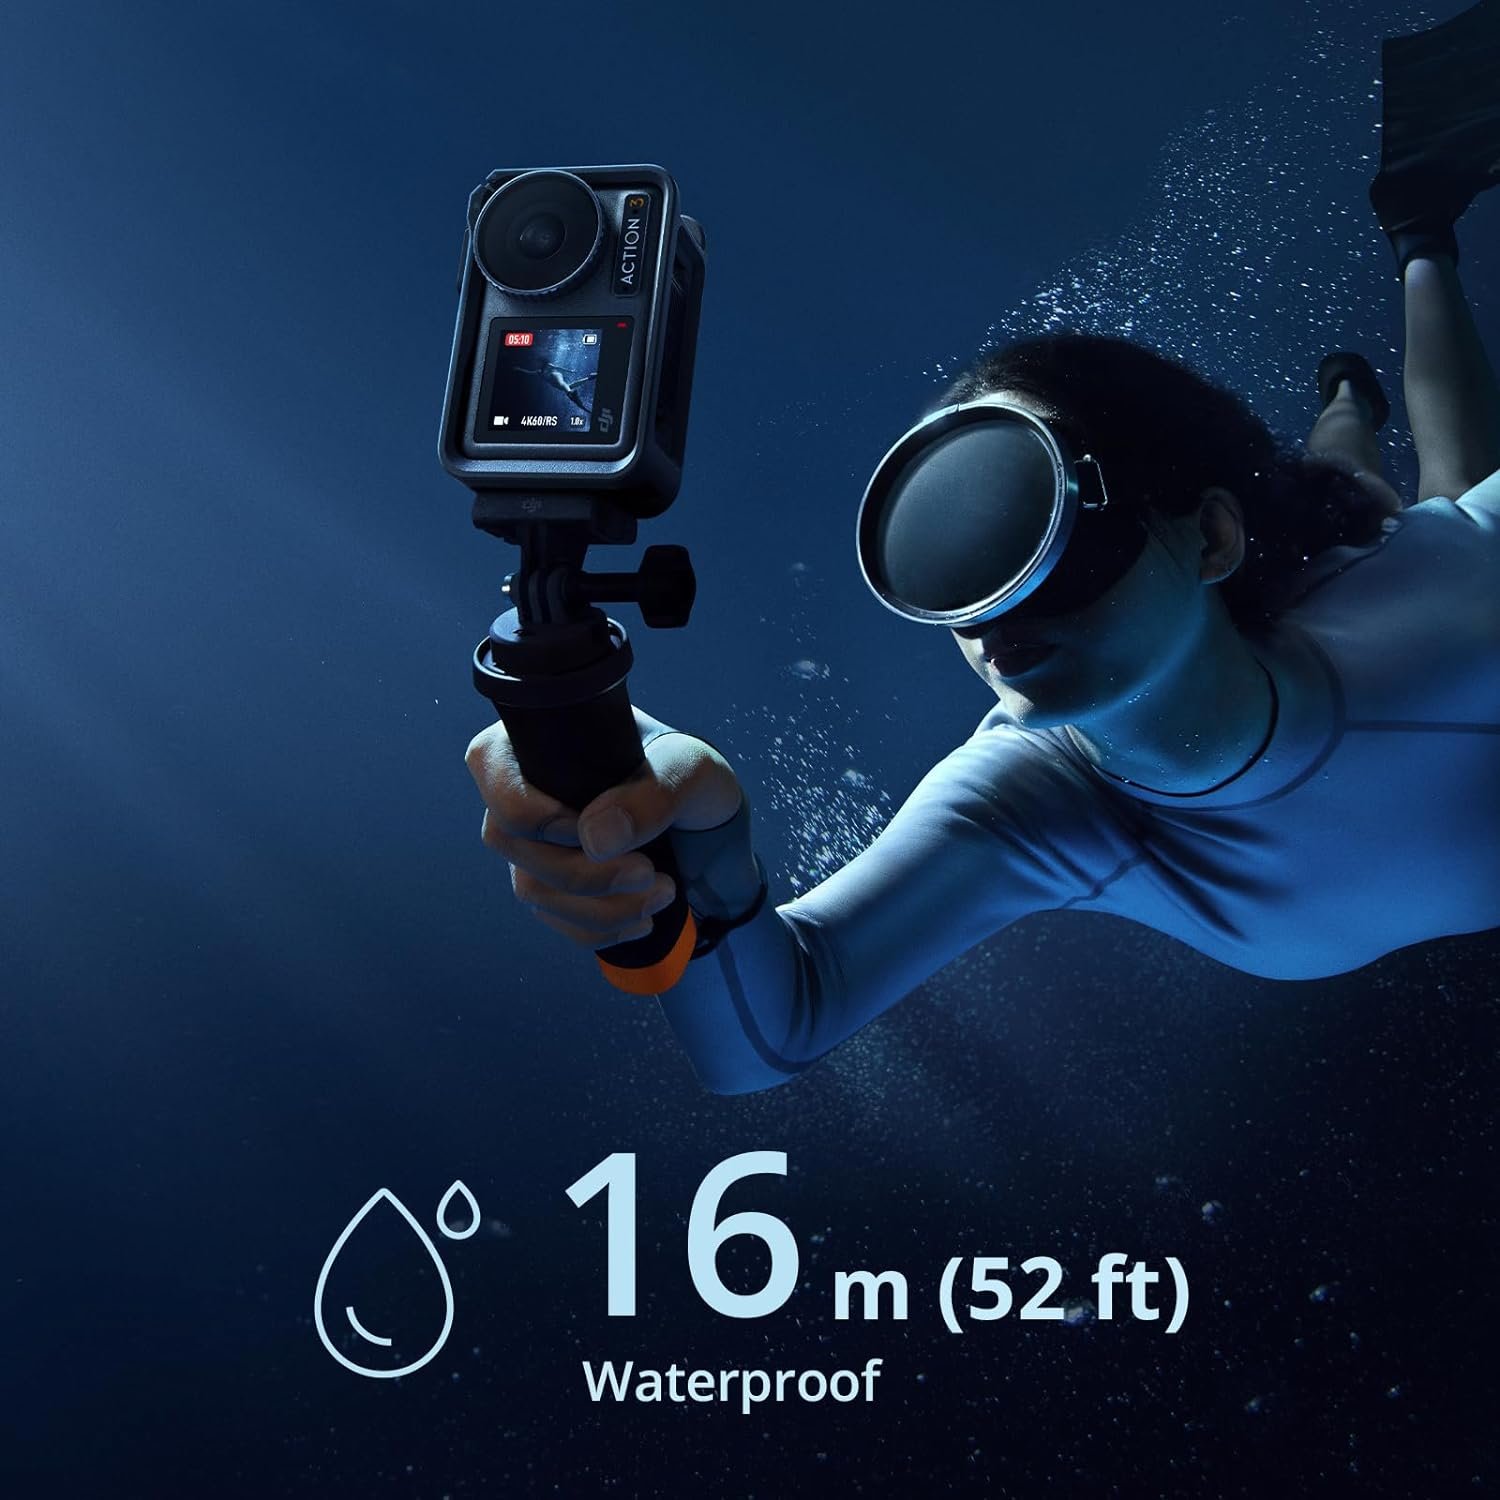 dji-osmo-waterproof-action-camera